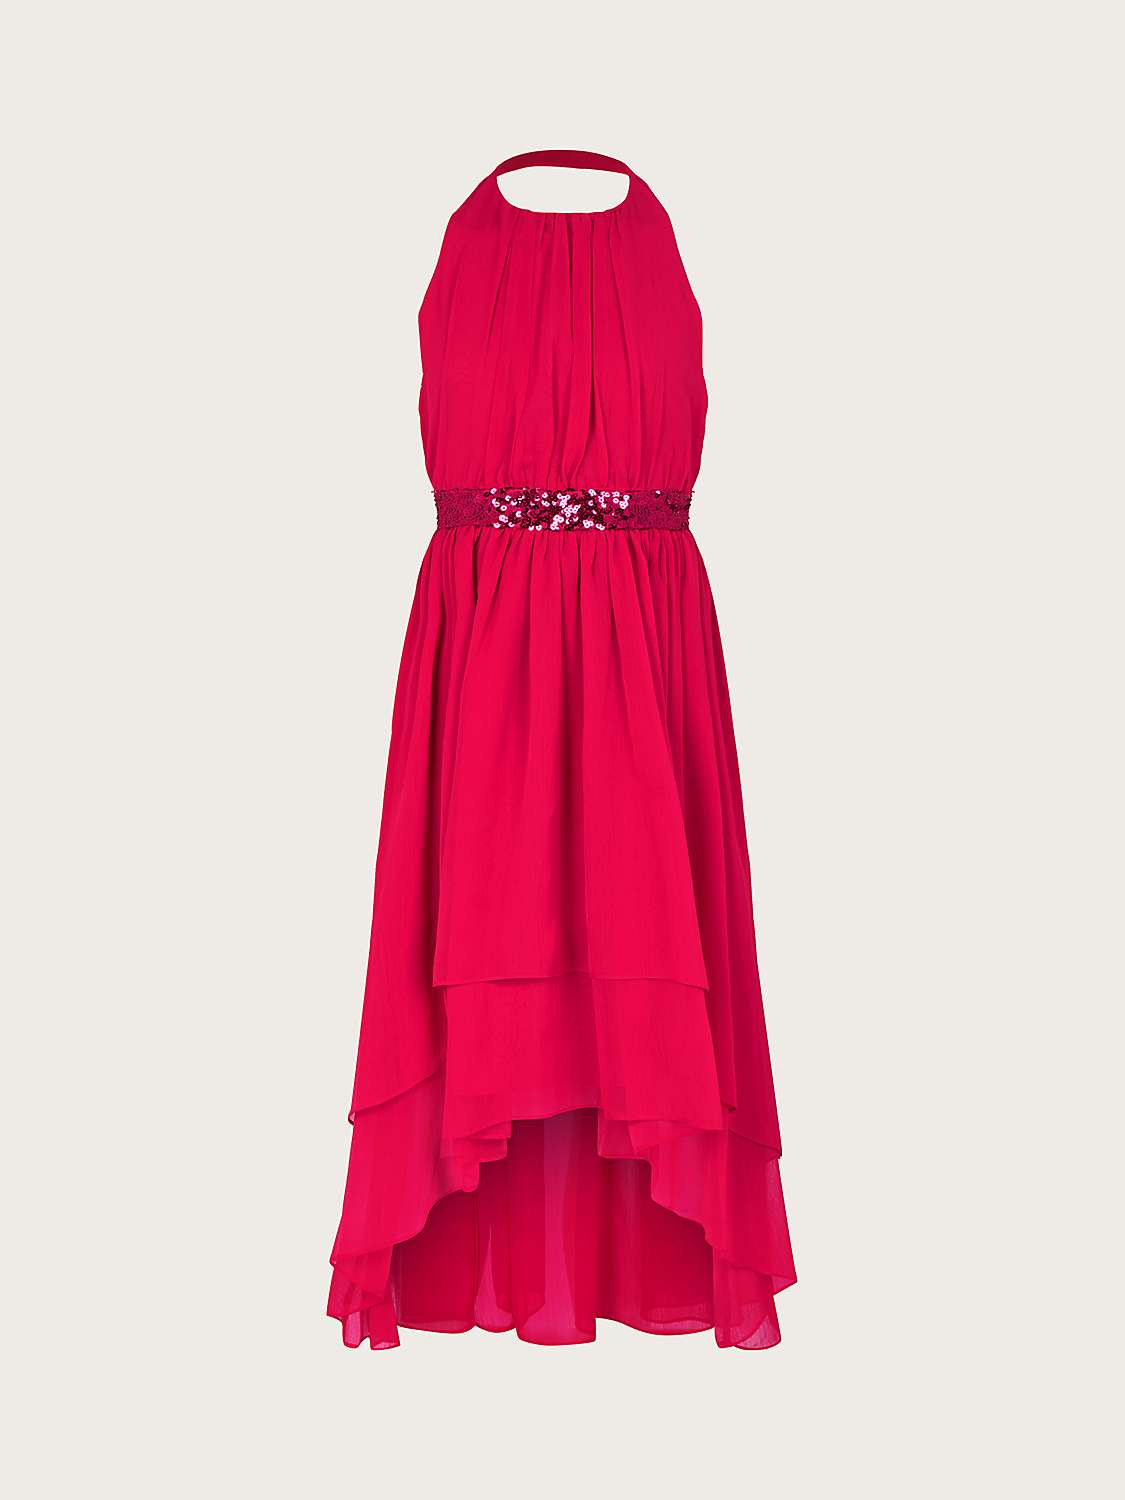 Buy Monsoon Kid's Hayley Halter Prom Dress, Red Online at johnlewis.com